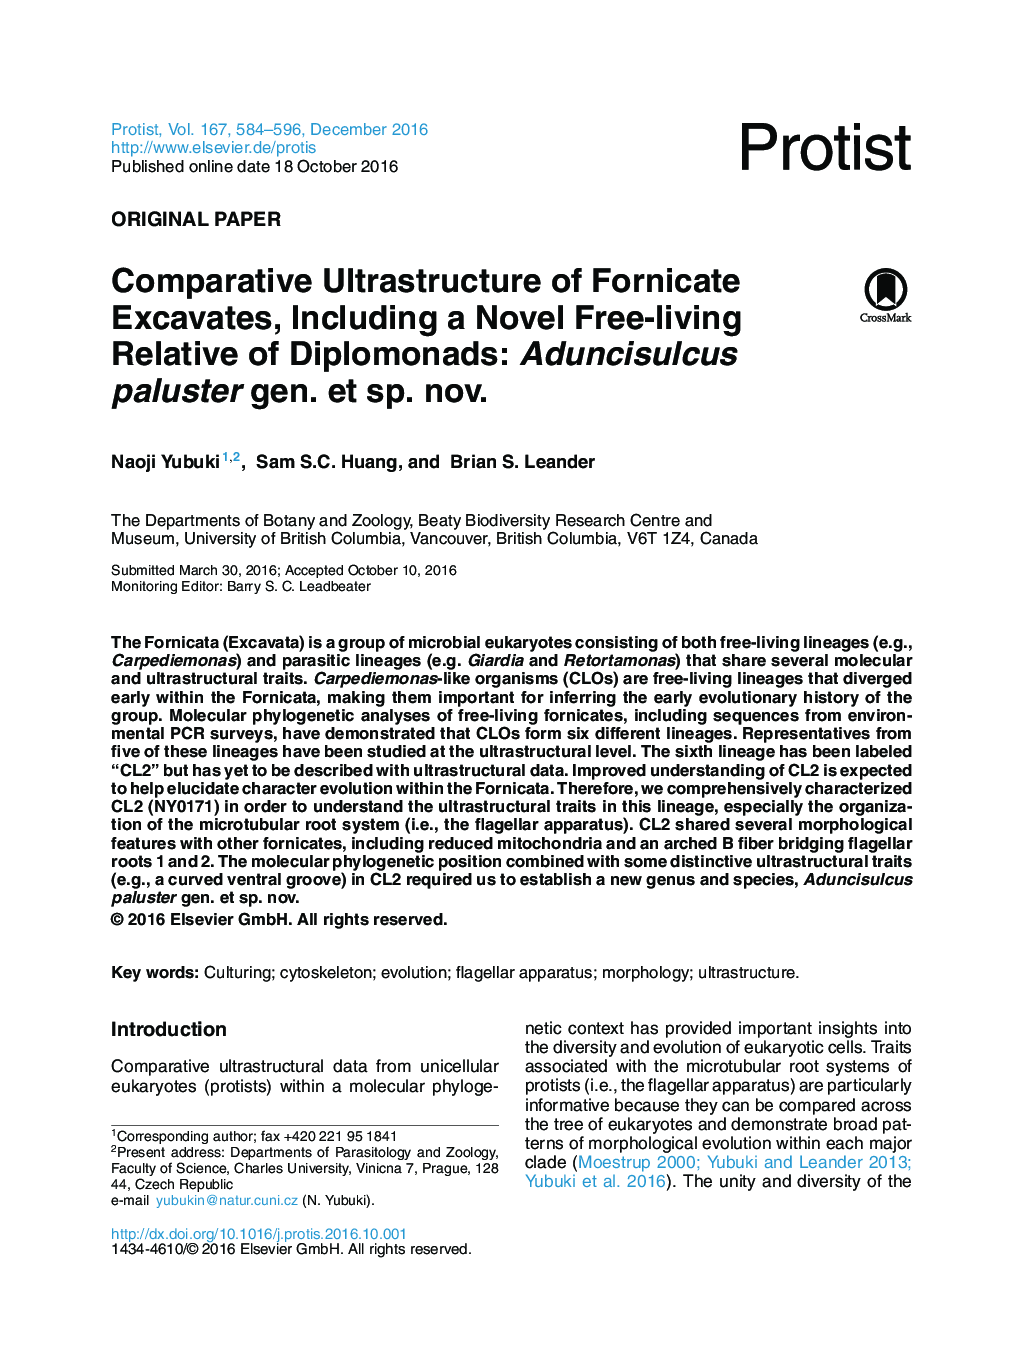 Original PaperComparative Ultrastructure of Fornicate Excavates, Including a Novel Free-living Relative of Diplomonads: Aduncisulcus paluster gen. et sp. nov.